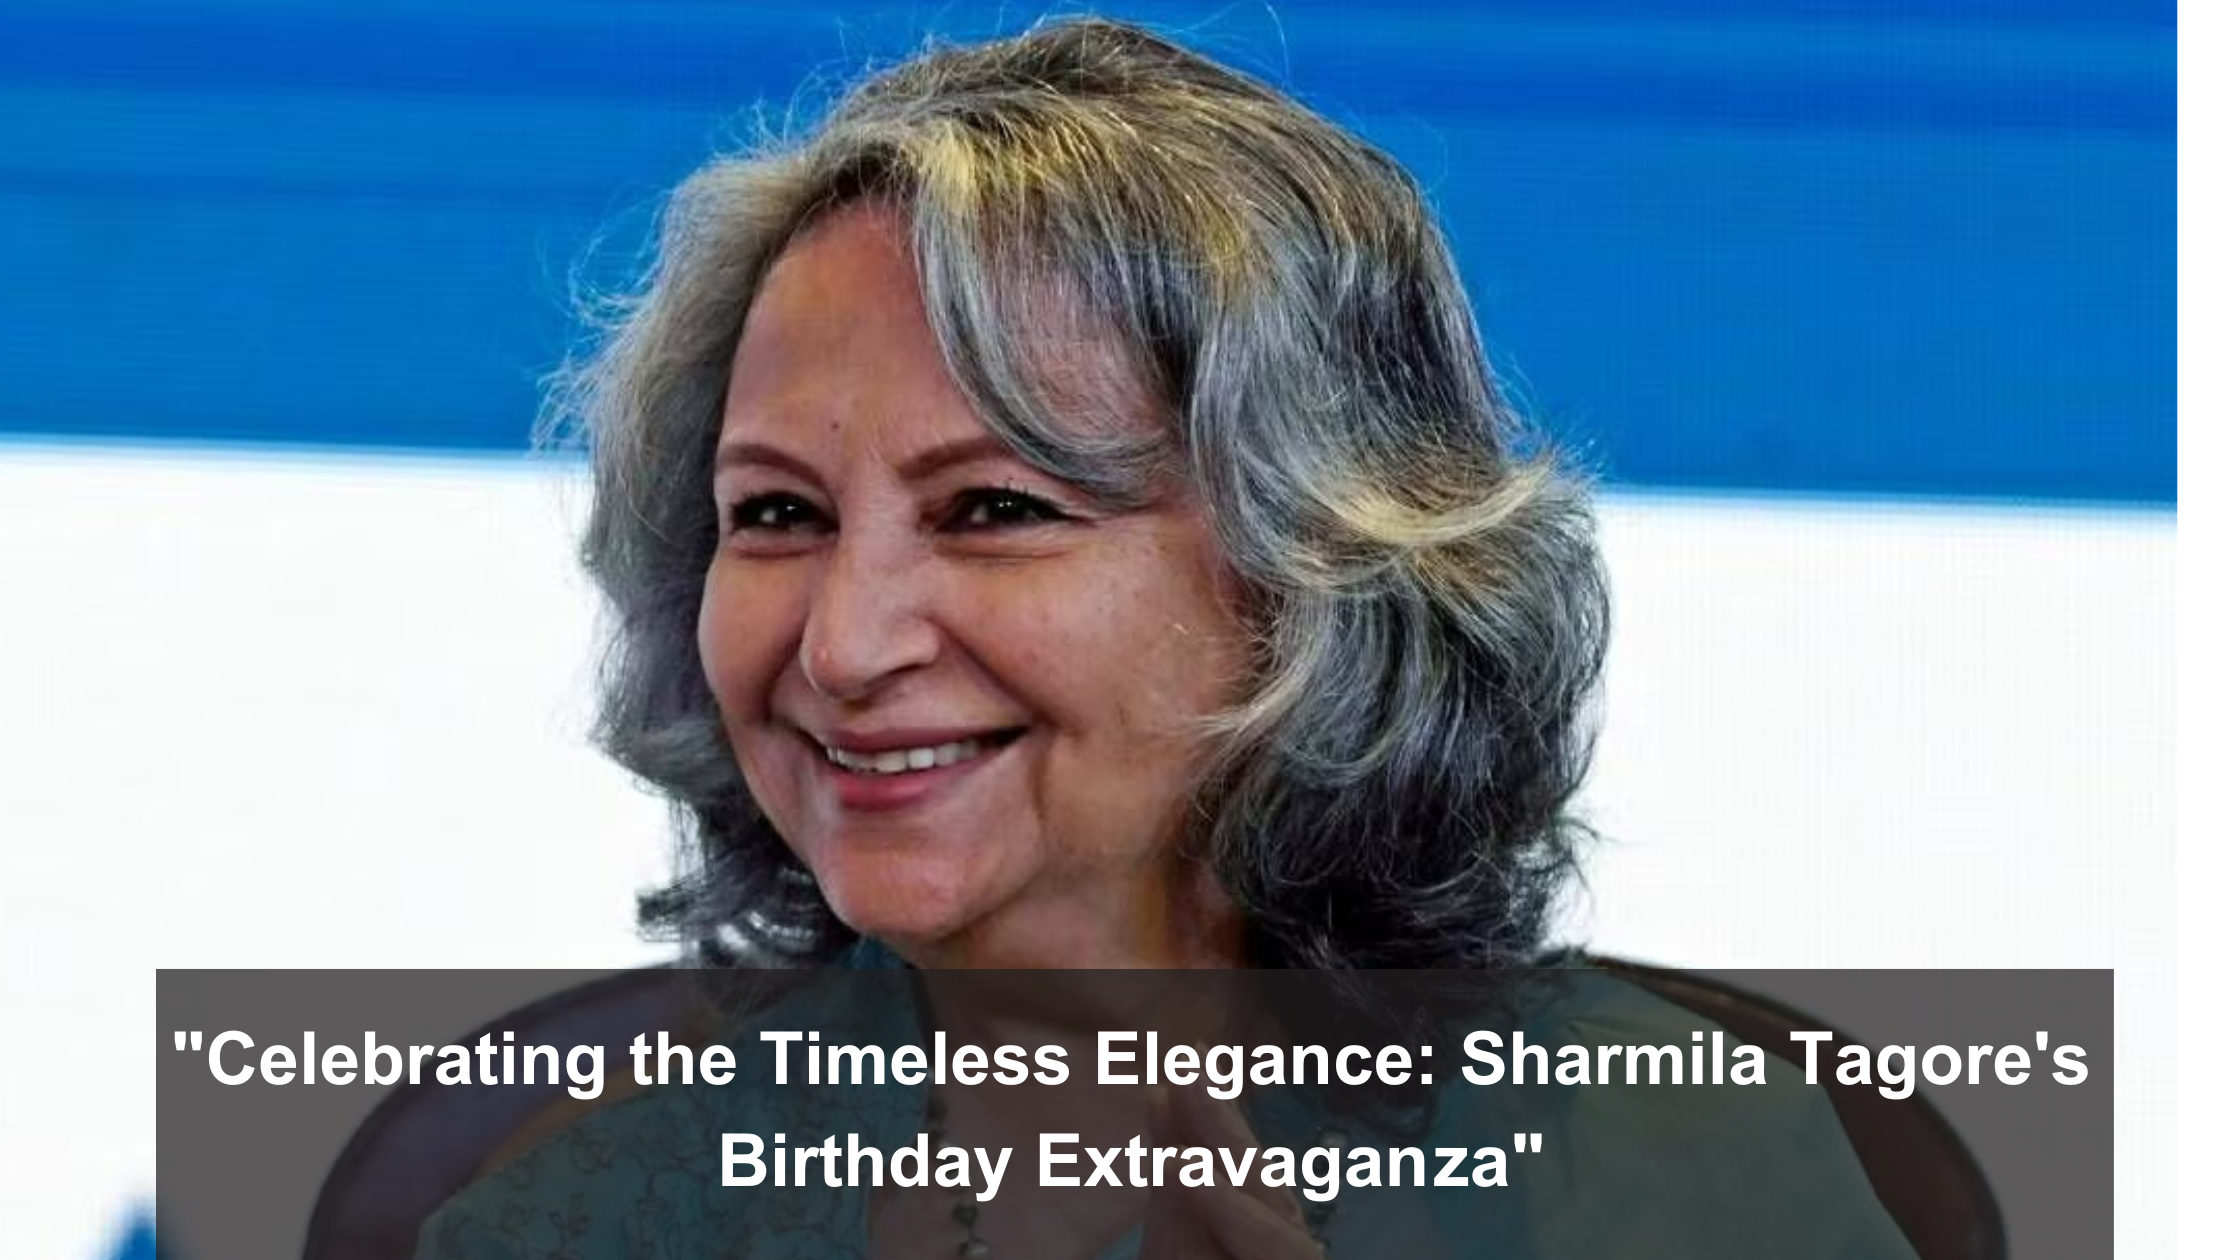 "Celebrating the Timeless Elegance: Sharmila Tagore's Birthday Extravaganza"